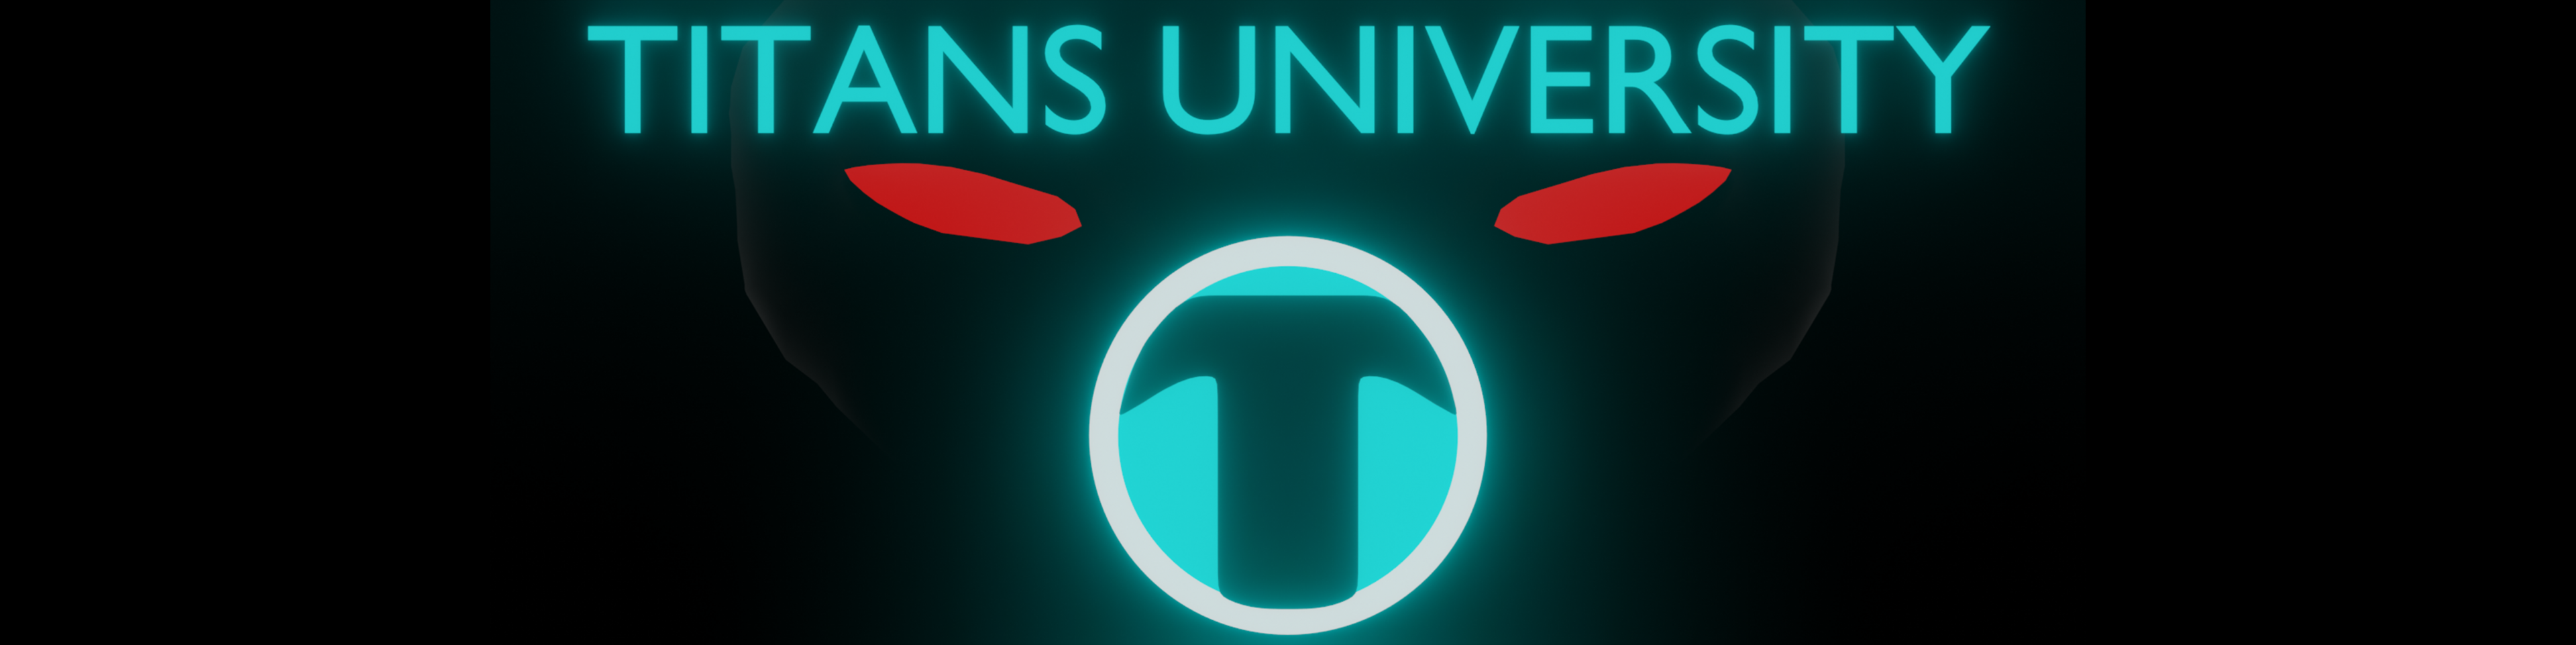 Titans University poster